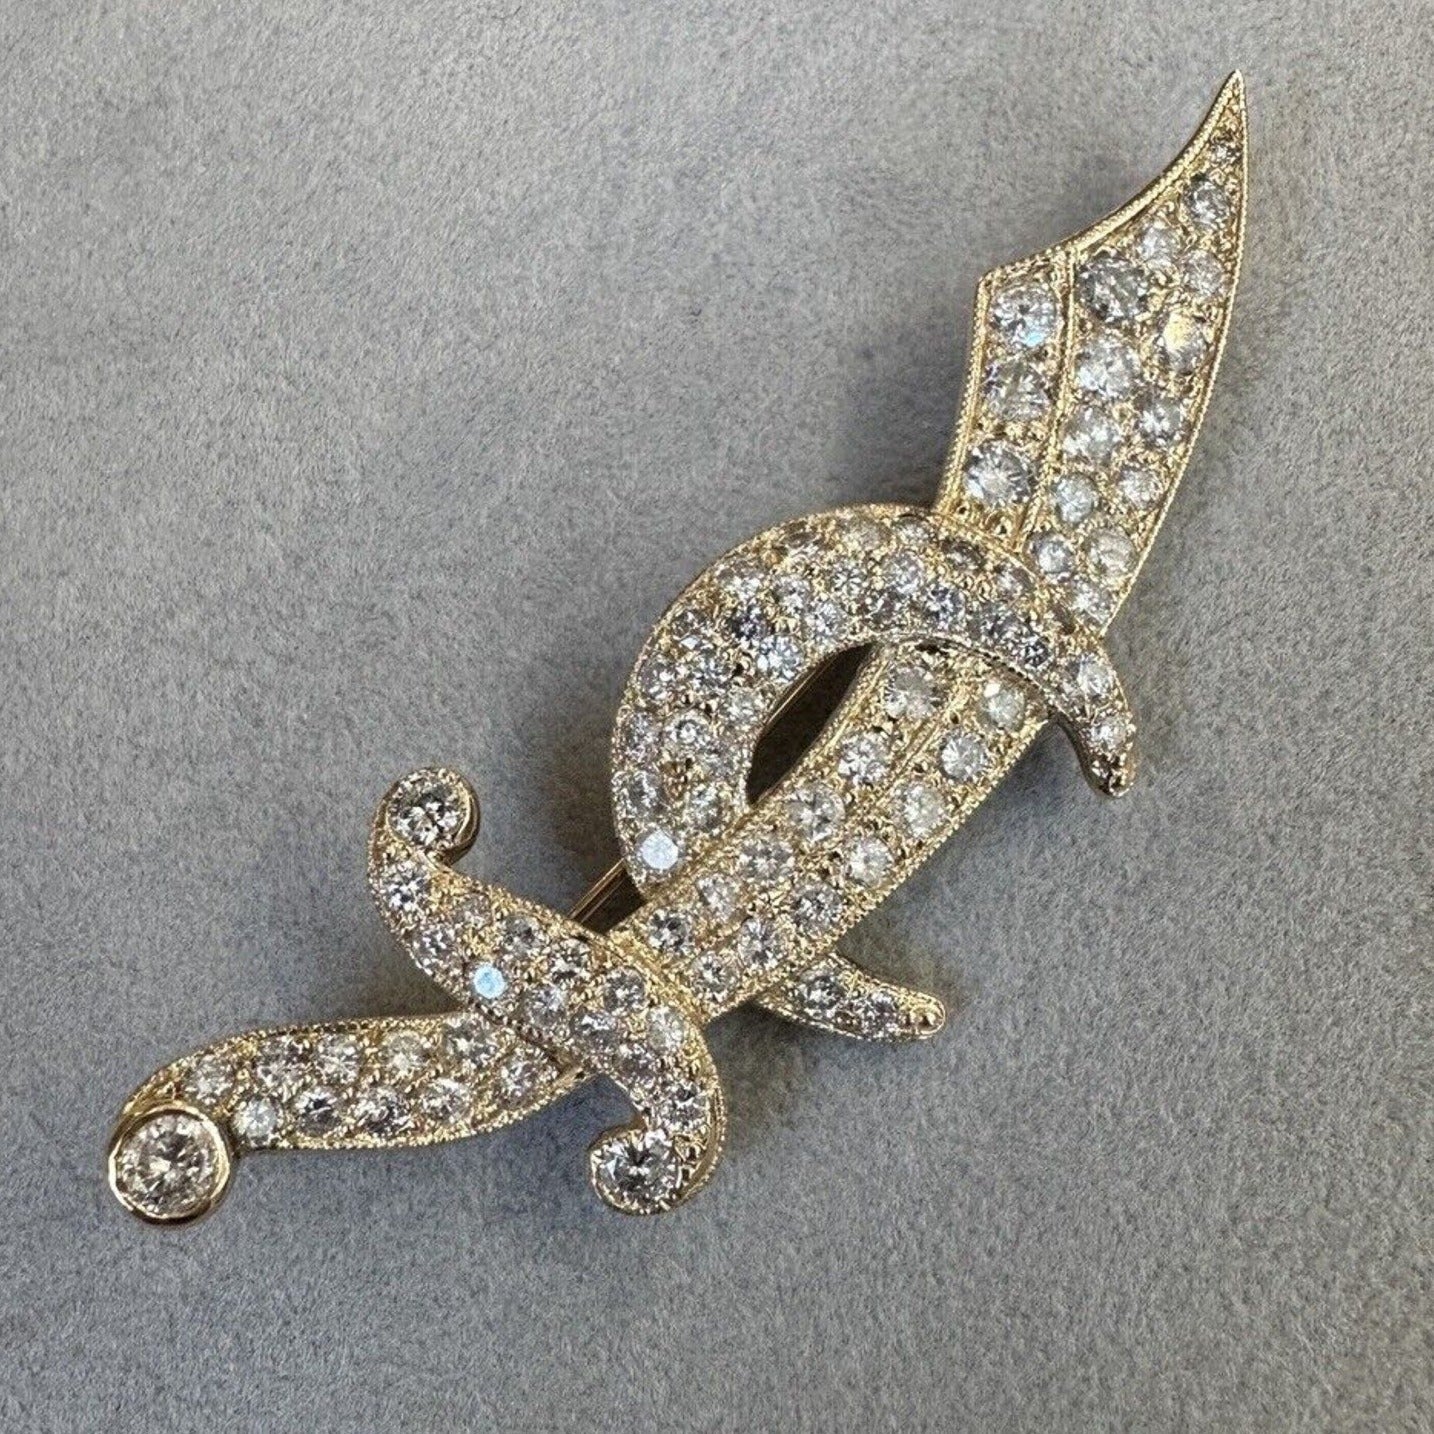 Sword & Crescent Moon Diamond Pin Brooch 3.50cttw in 14k Yellow Gold - HM2566SR